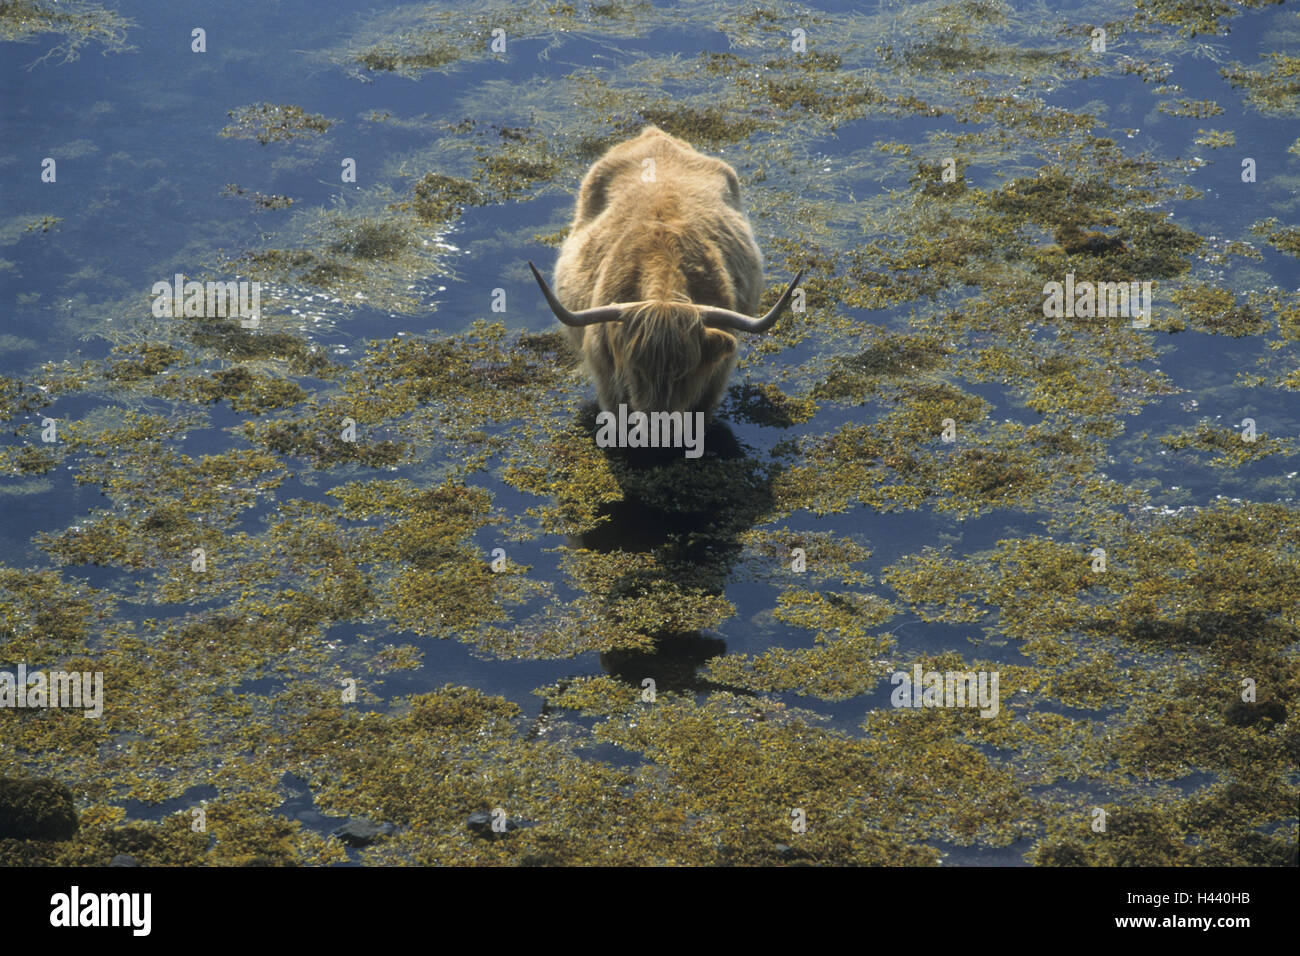 Scottish highland cattle, Bos primigenius following Taurus, water, algae, stand, Scotland, Dunvegan, Stock Photo